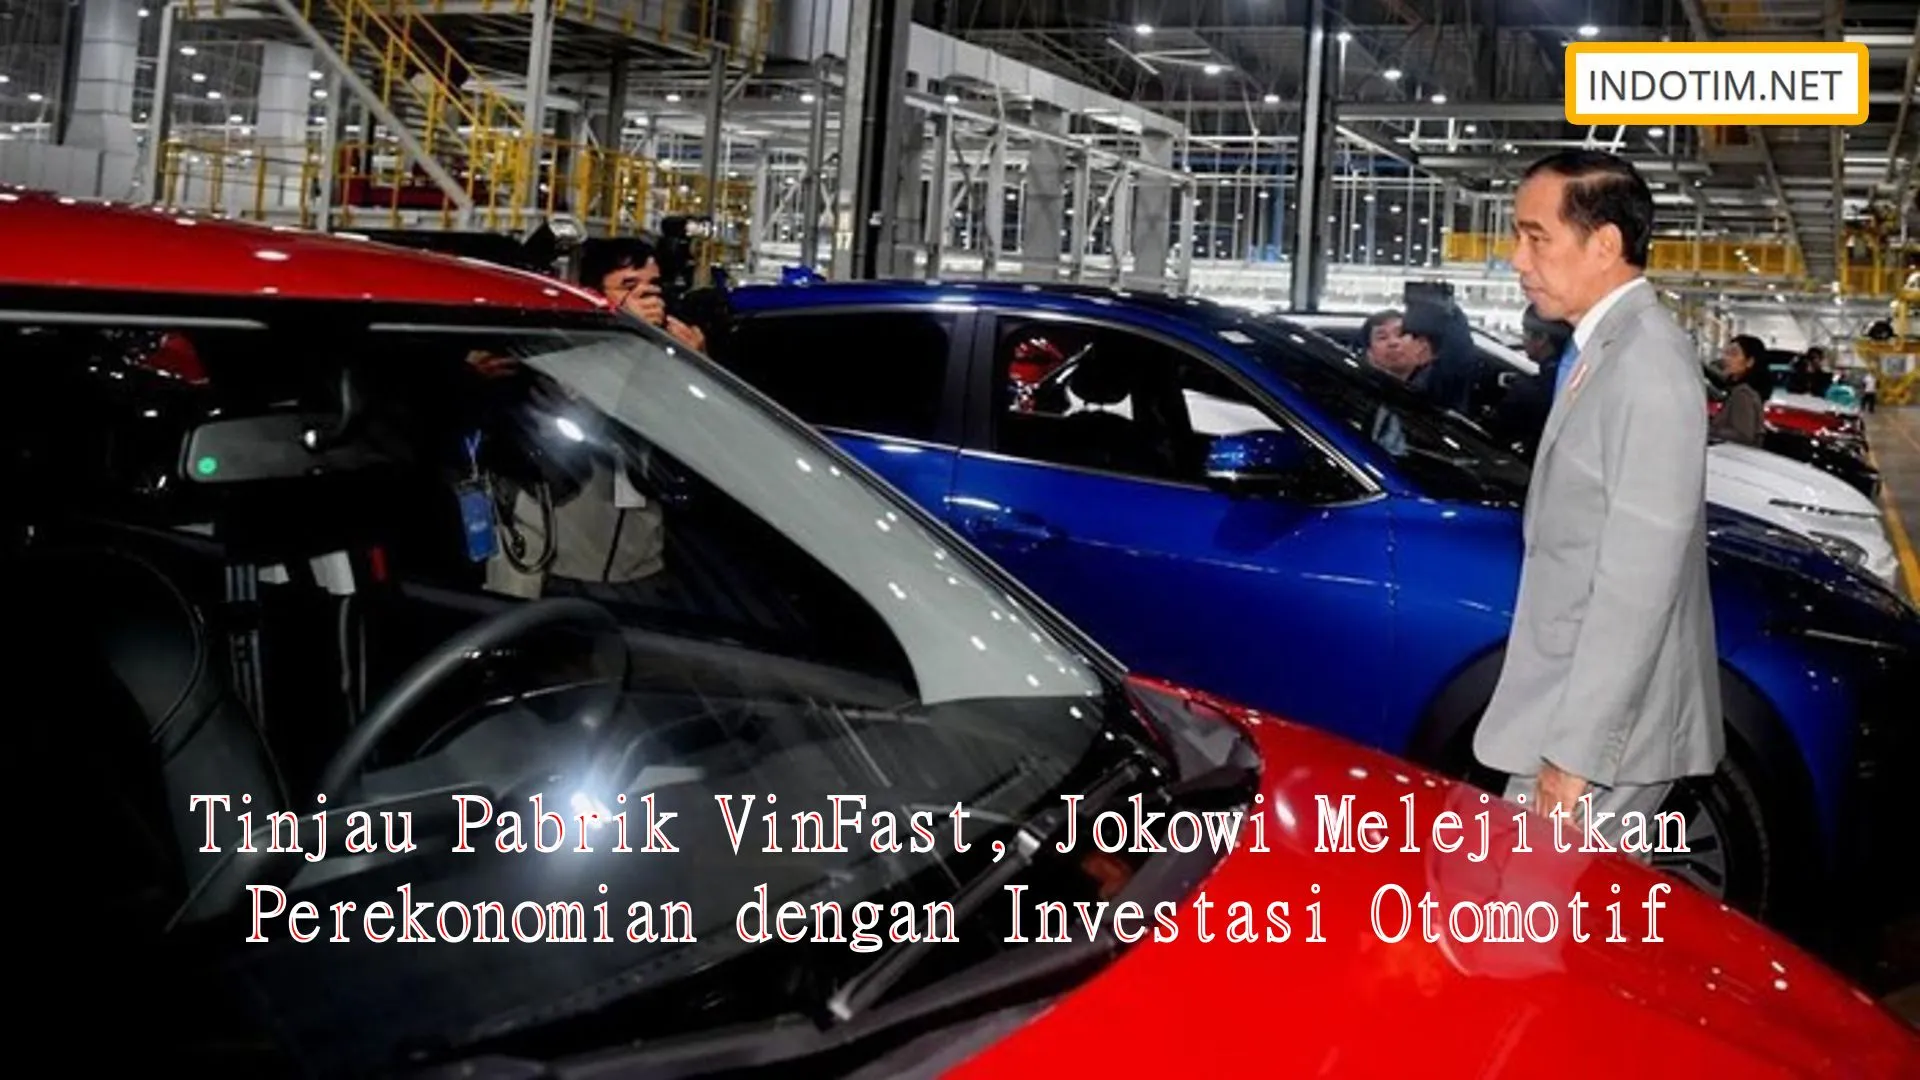 Tinjau Pabrik VinFast, Jokowi Melejitkan Perekonomian dengan Investasi Otomotif